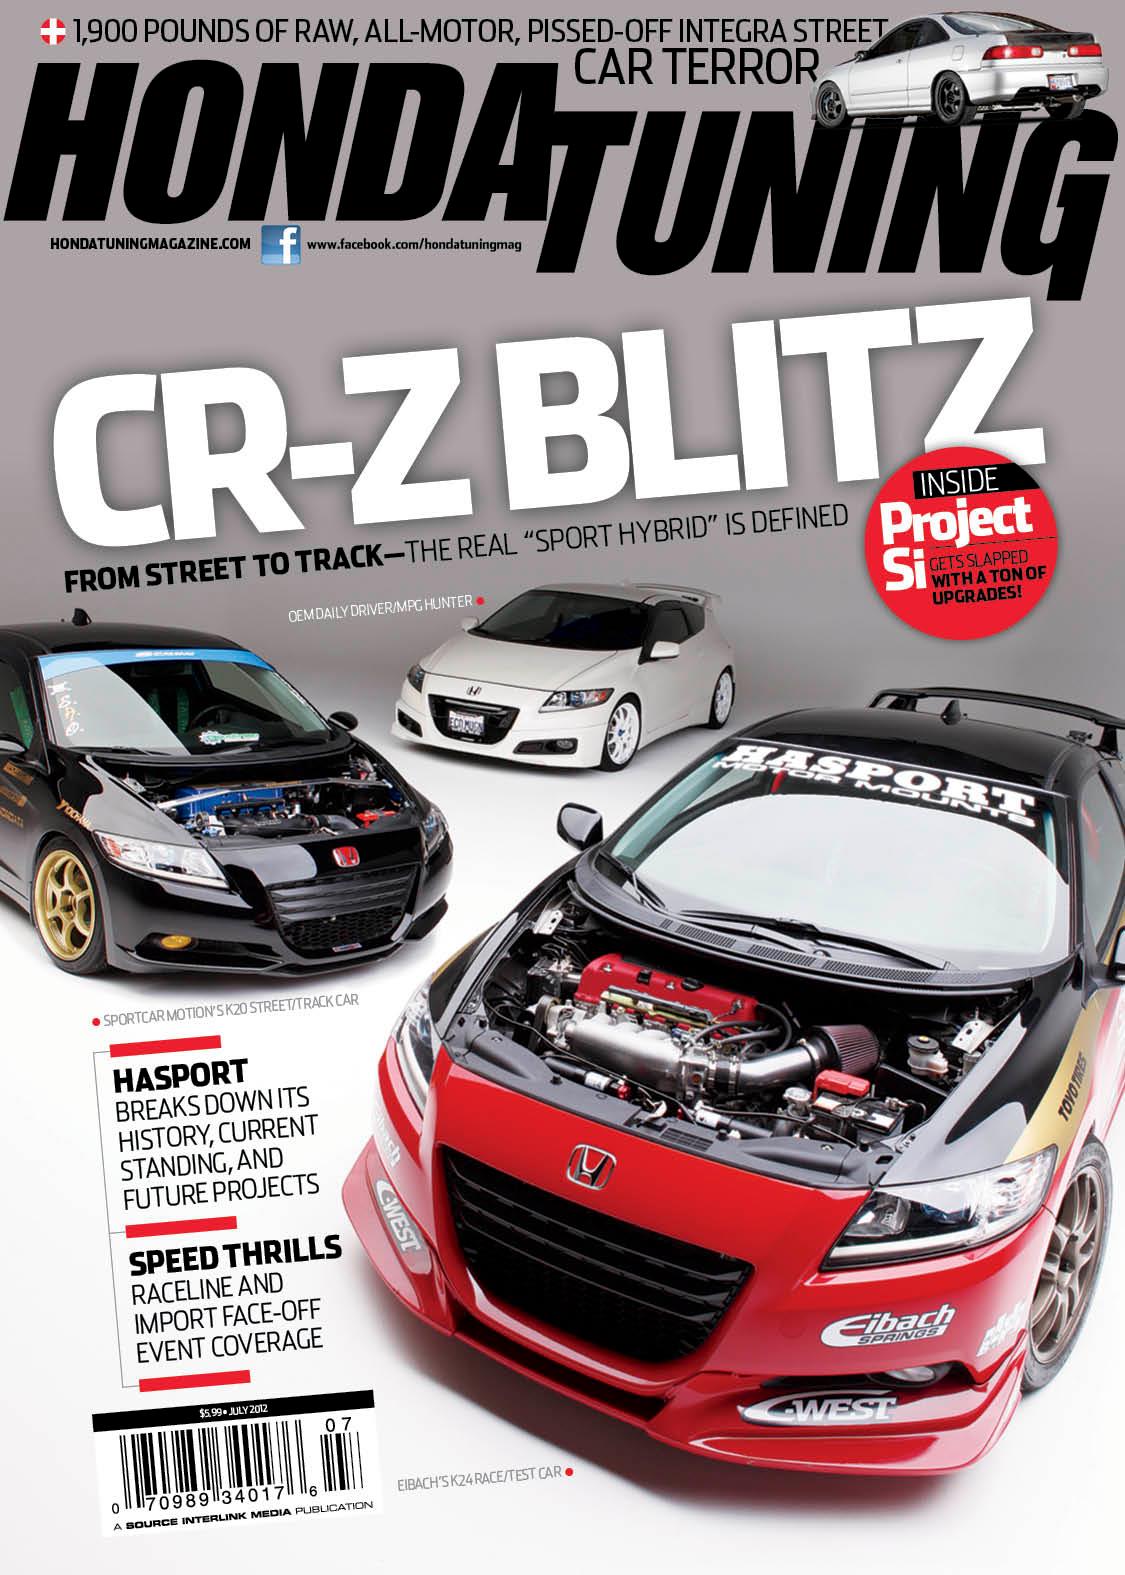 Honda Tuning Magazine Cover July2012